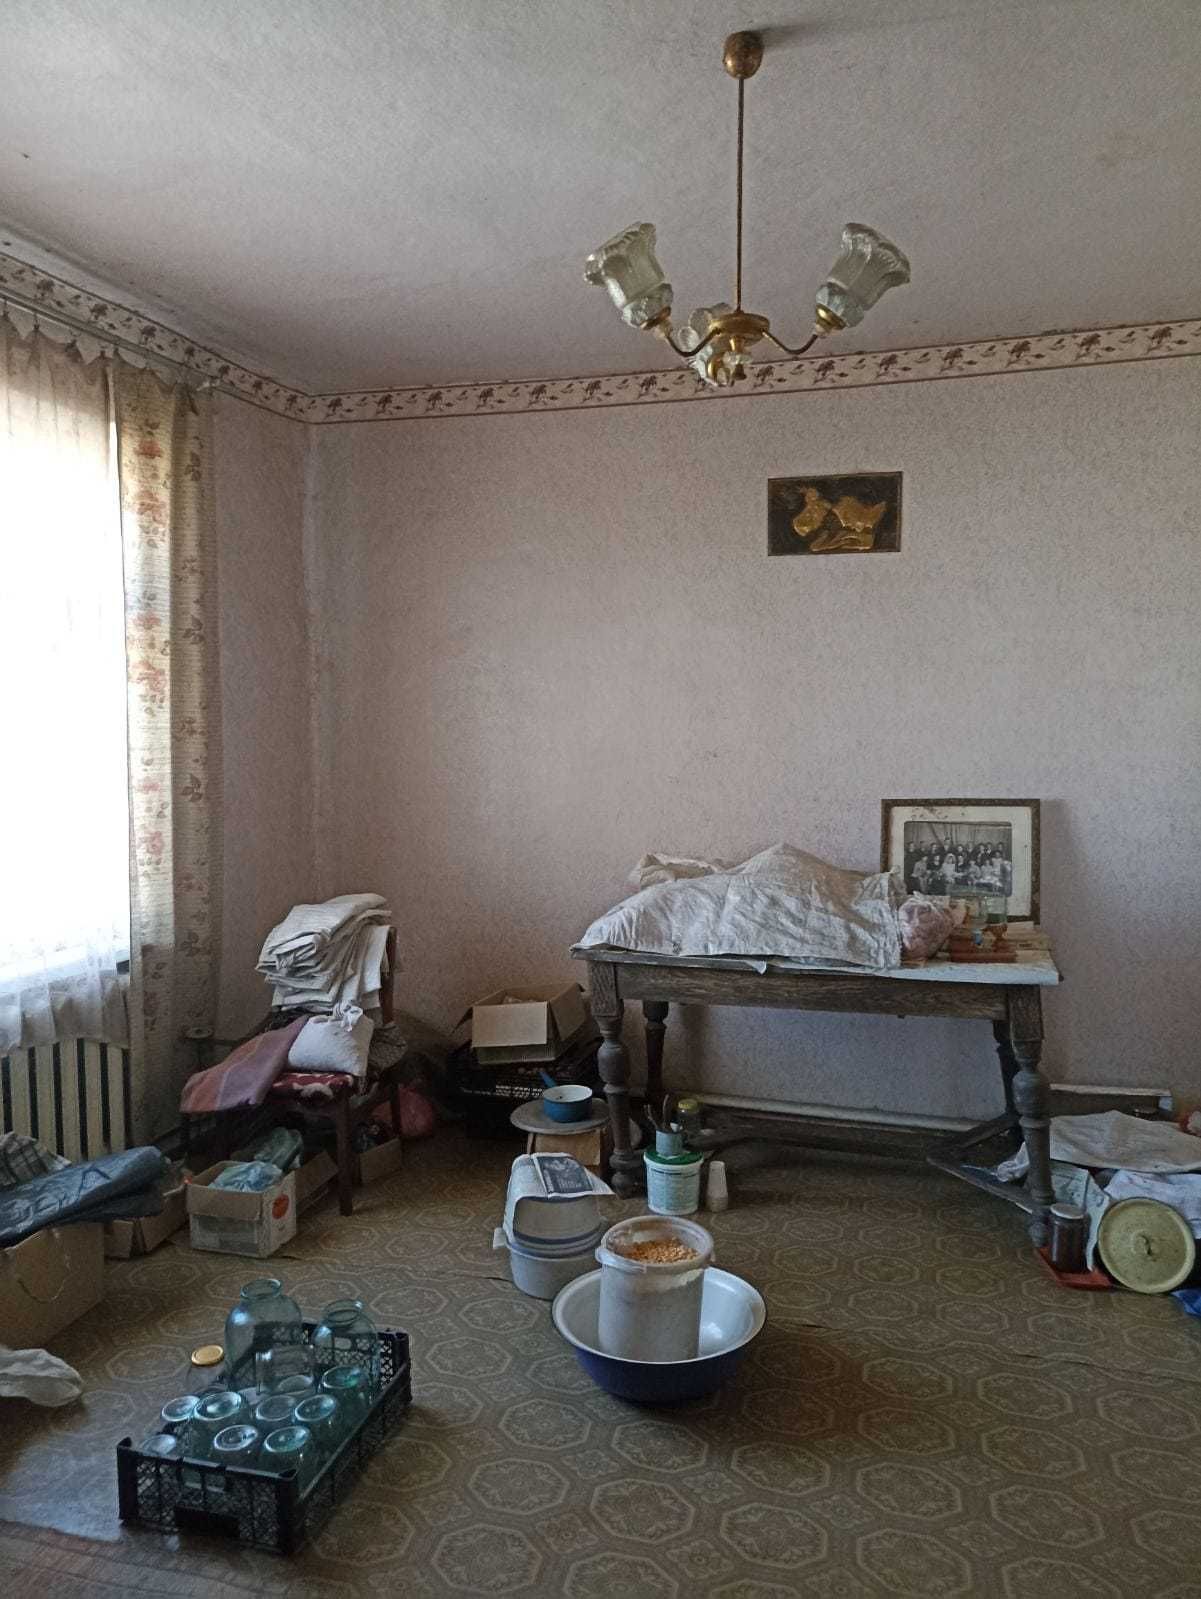 Продам дом в центре села Шамраевка